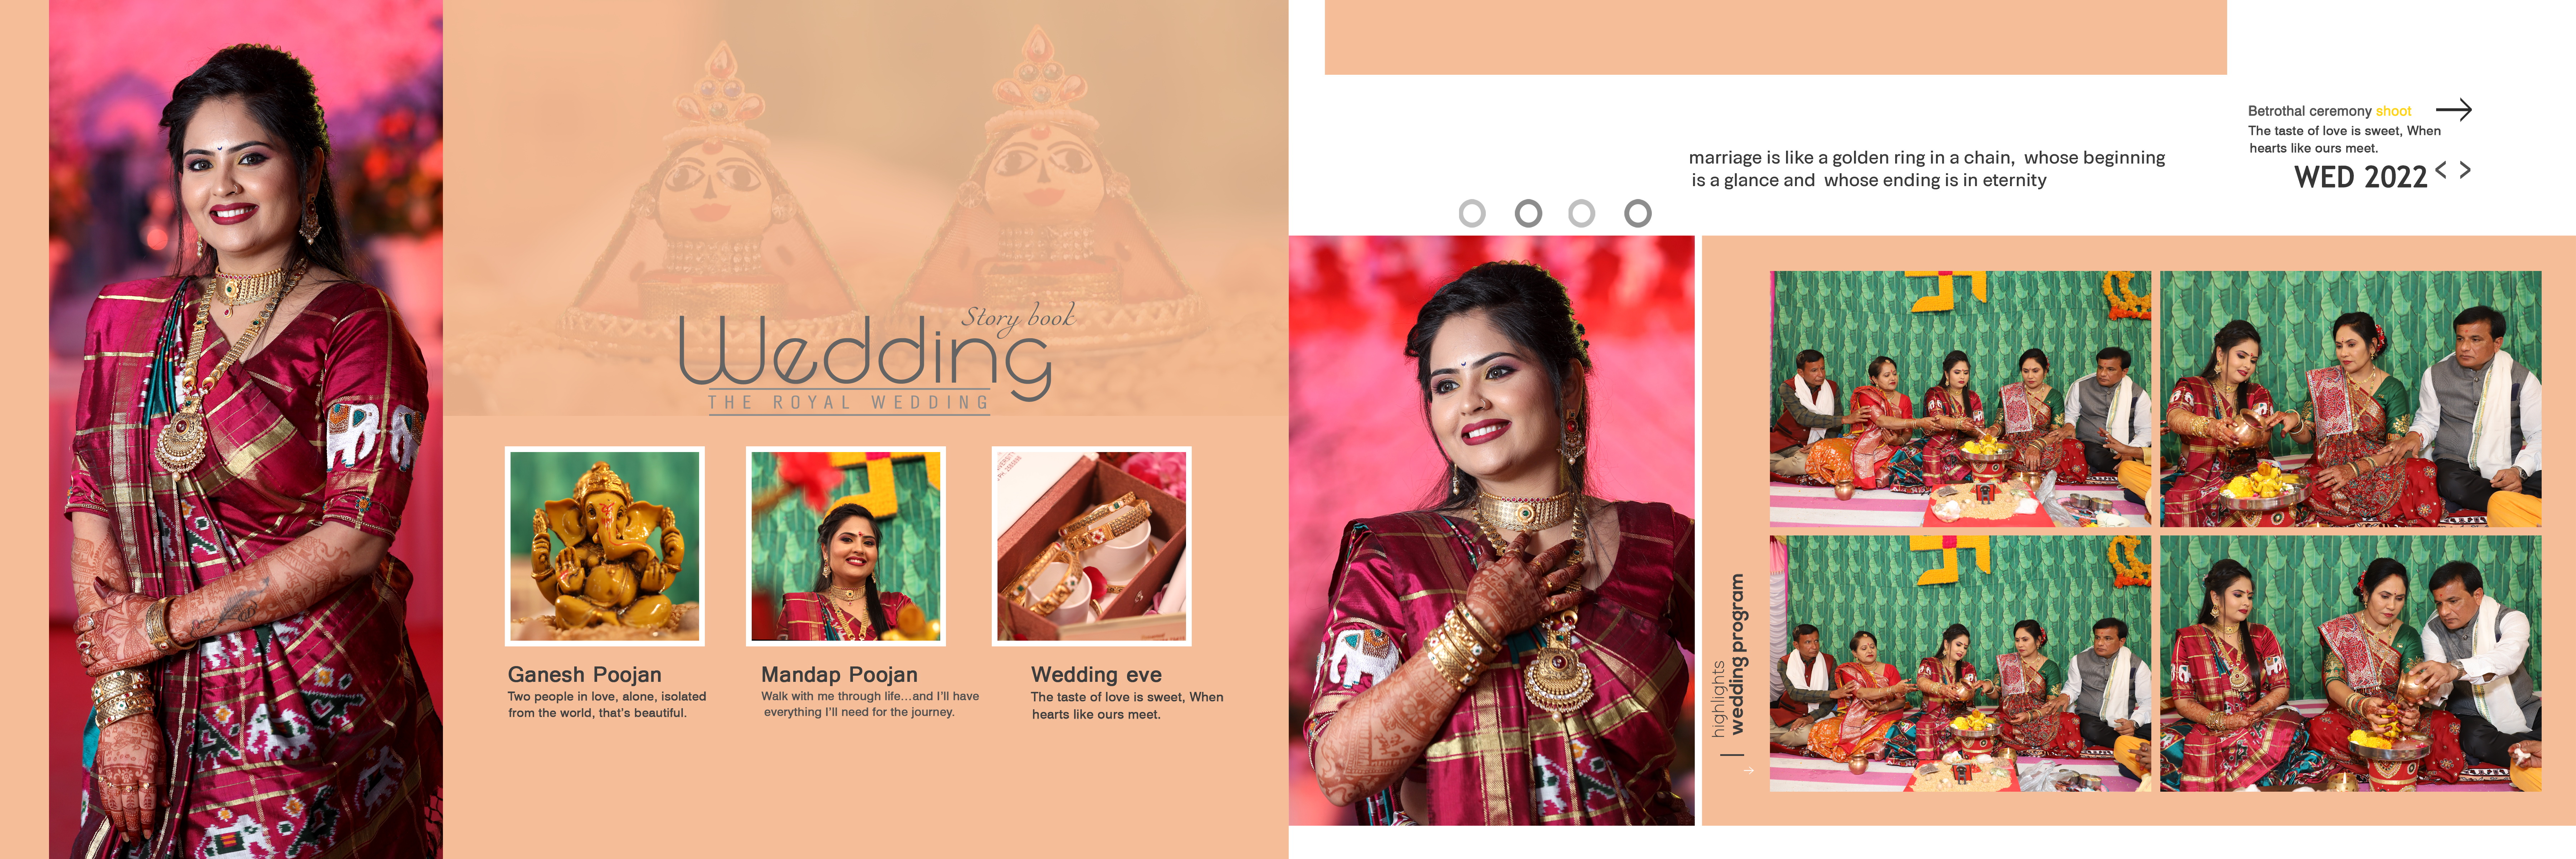 Wedding Album Design PSD Free Download 12X36 2020